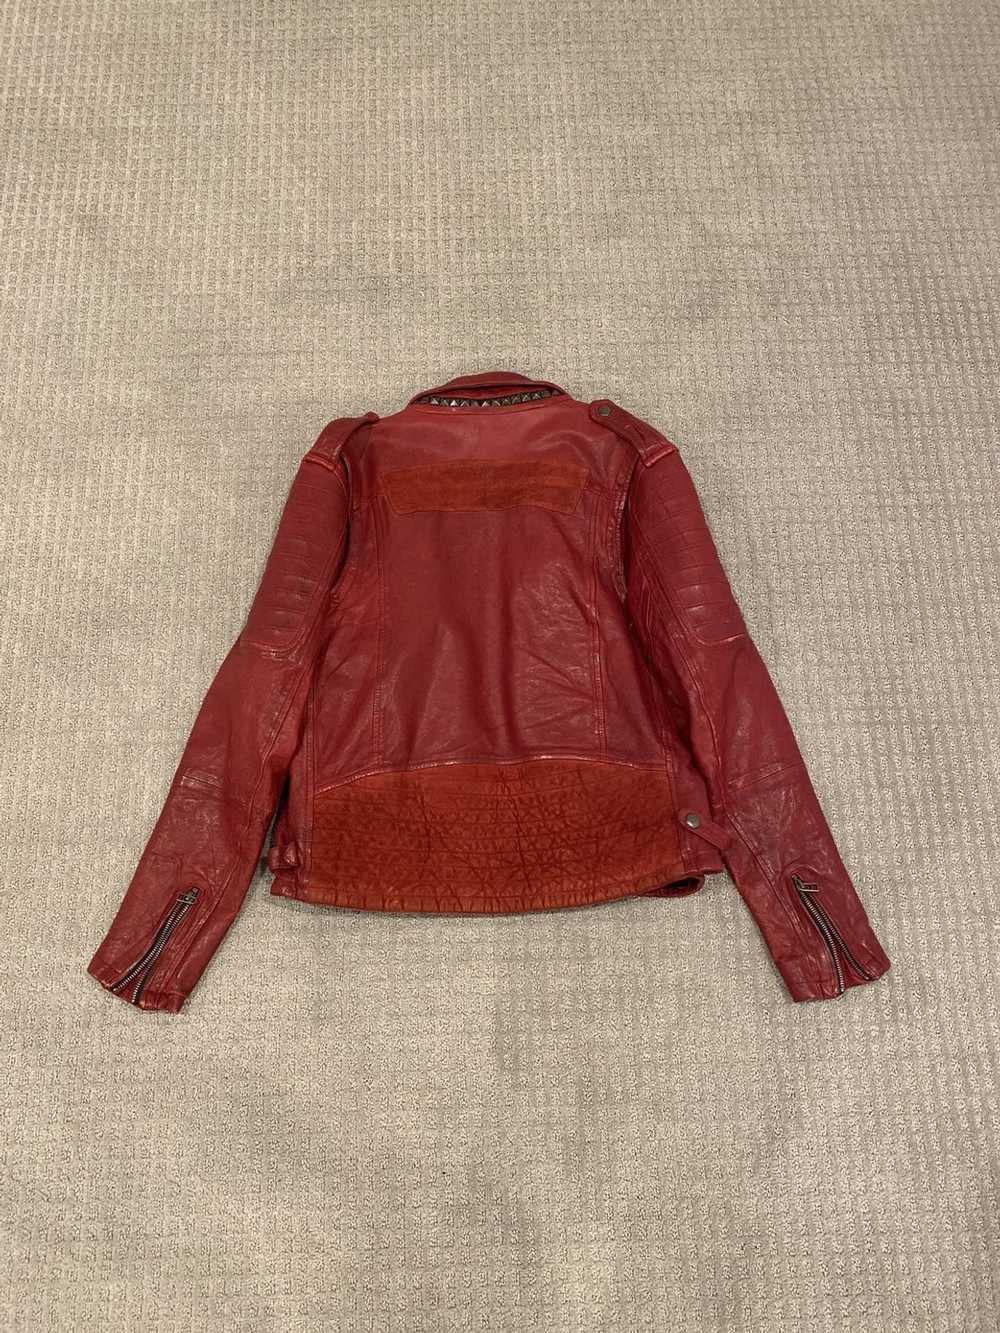 Edun Edun Red Leather Moto Jacket - image 2